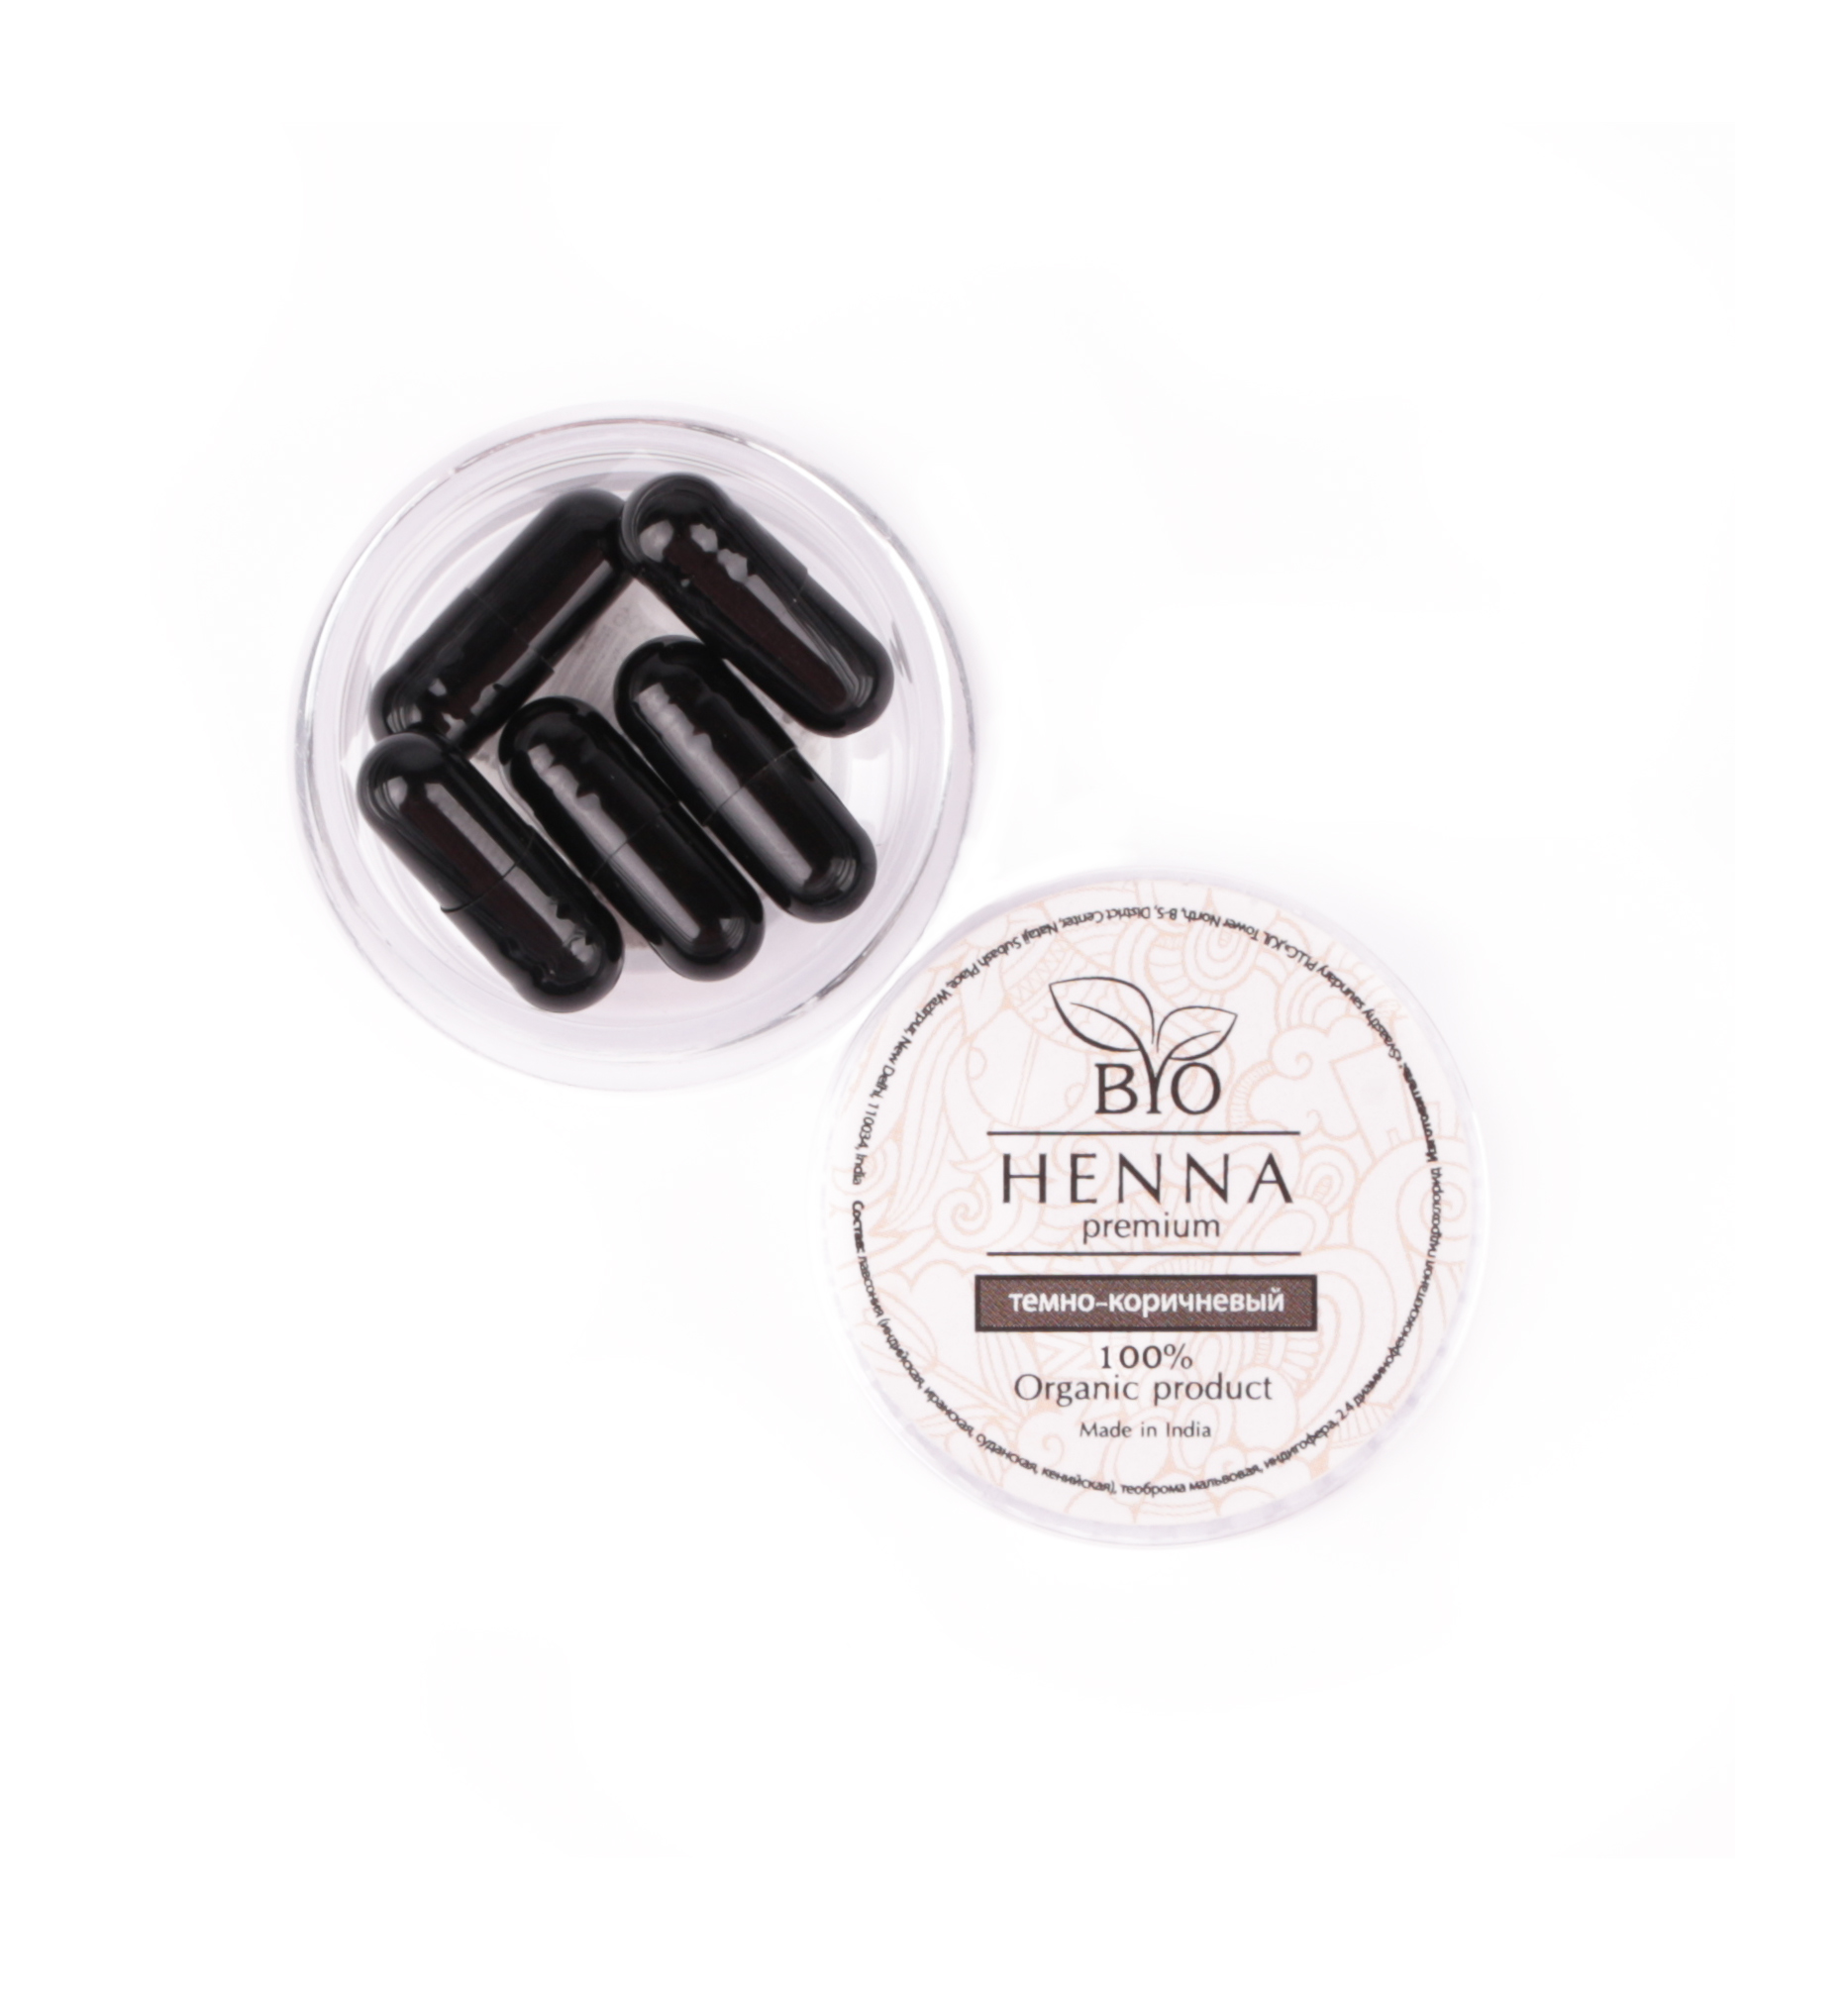 Bio Henna Premium – kapsułki (5szt – 1g) Henna